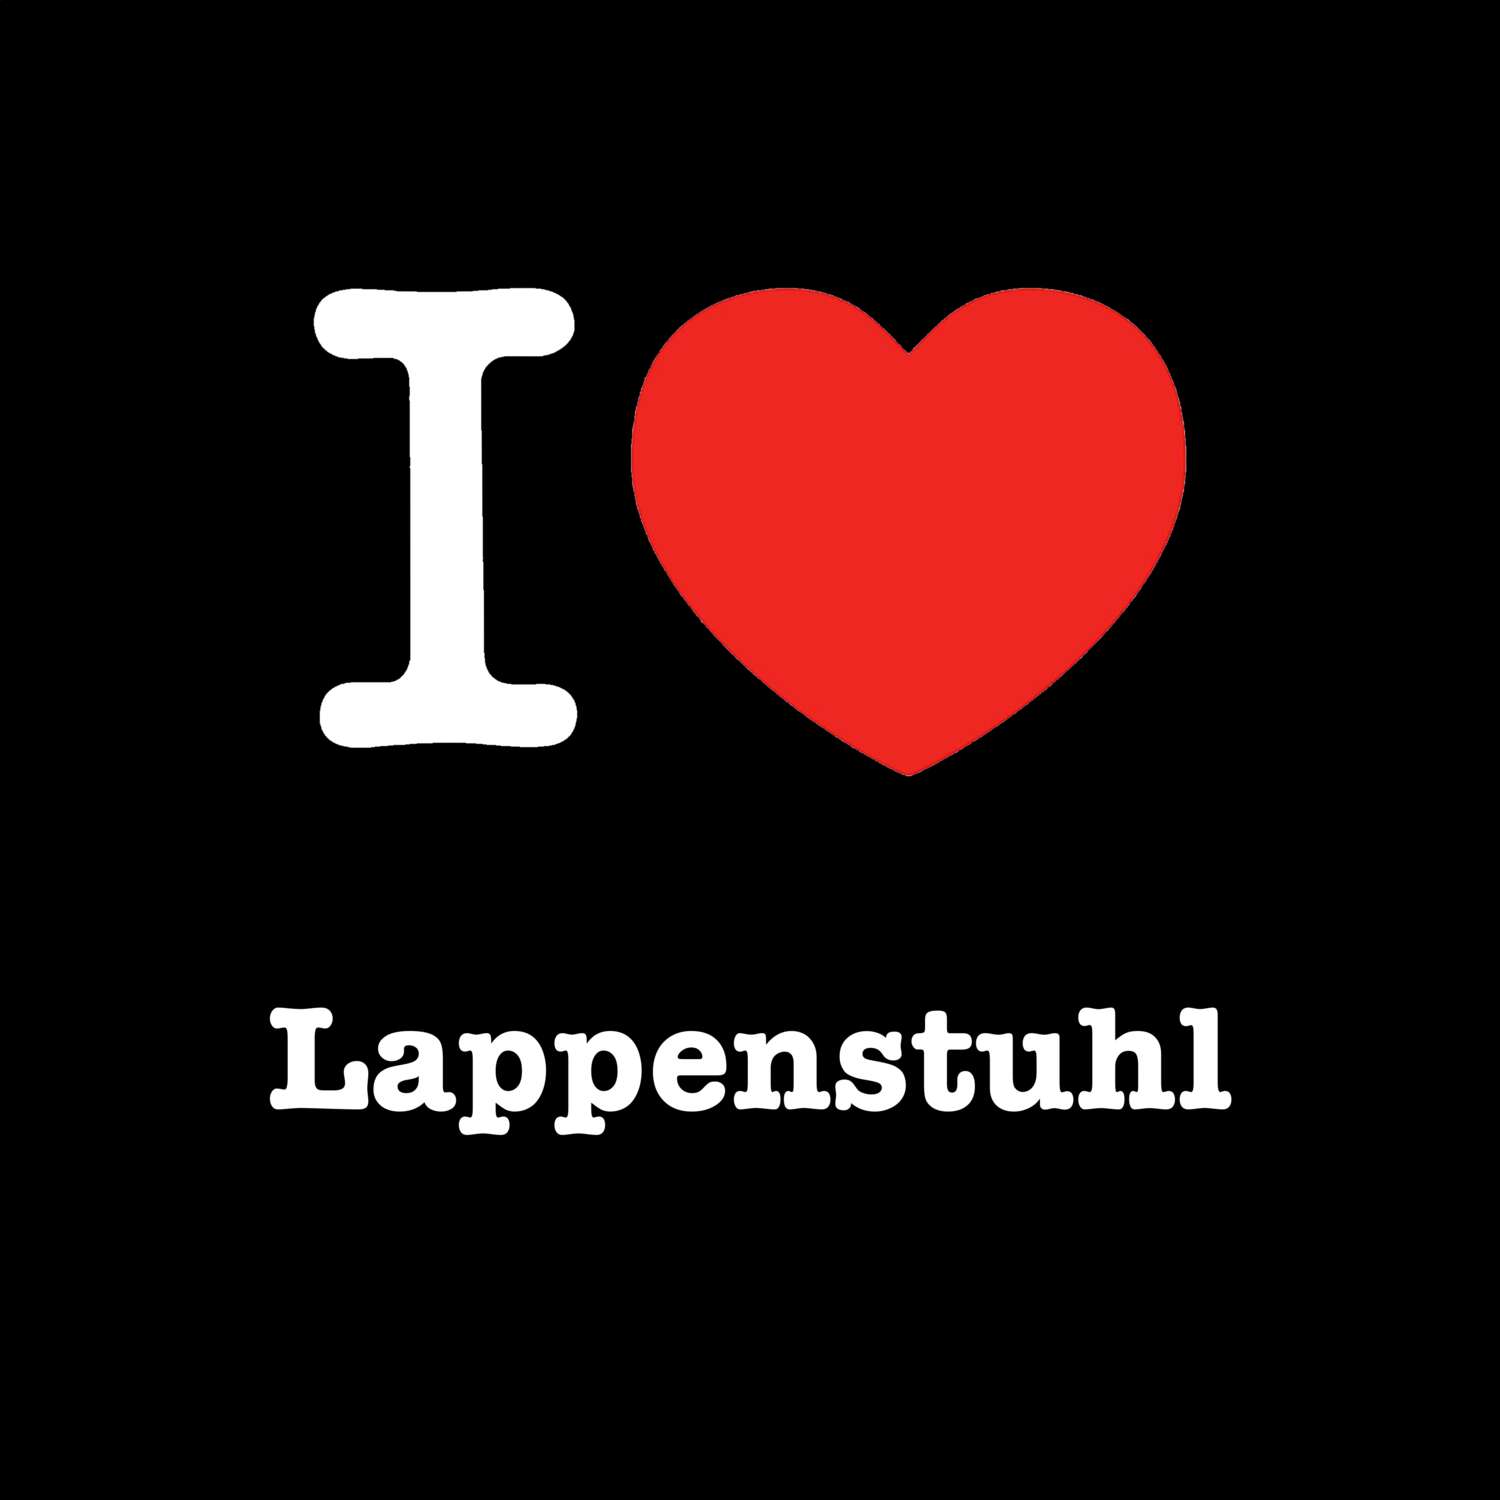 Lappenstuhl T-Shirt »I love«